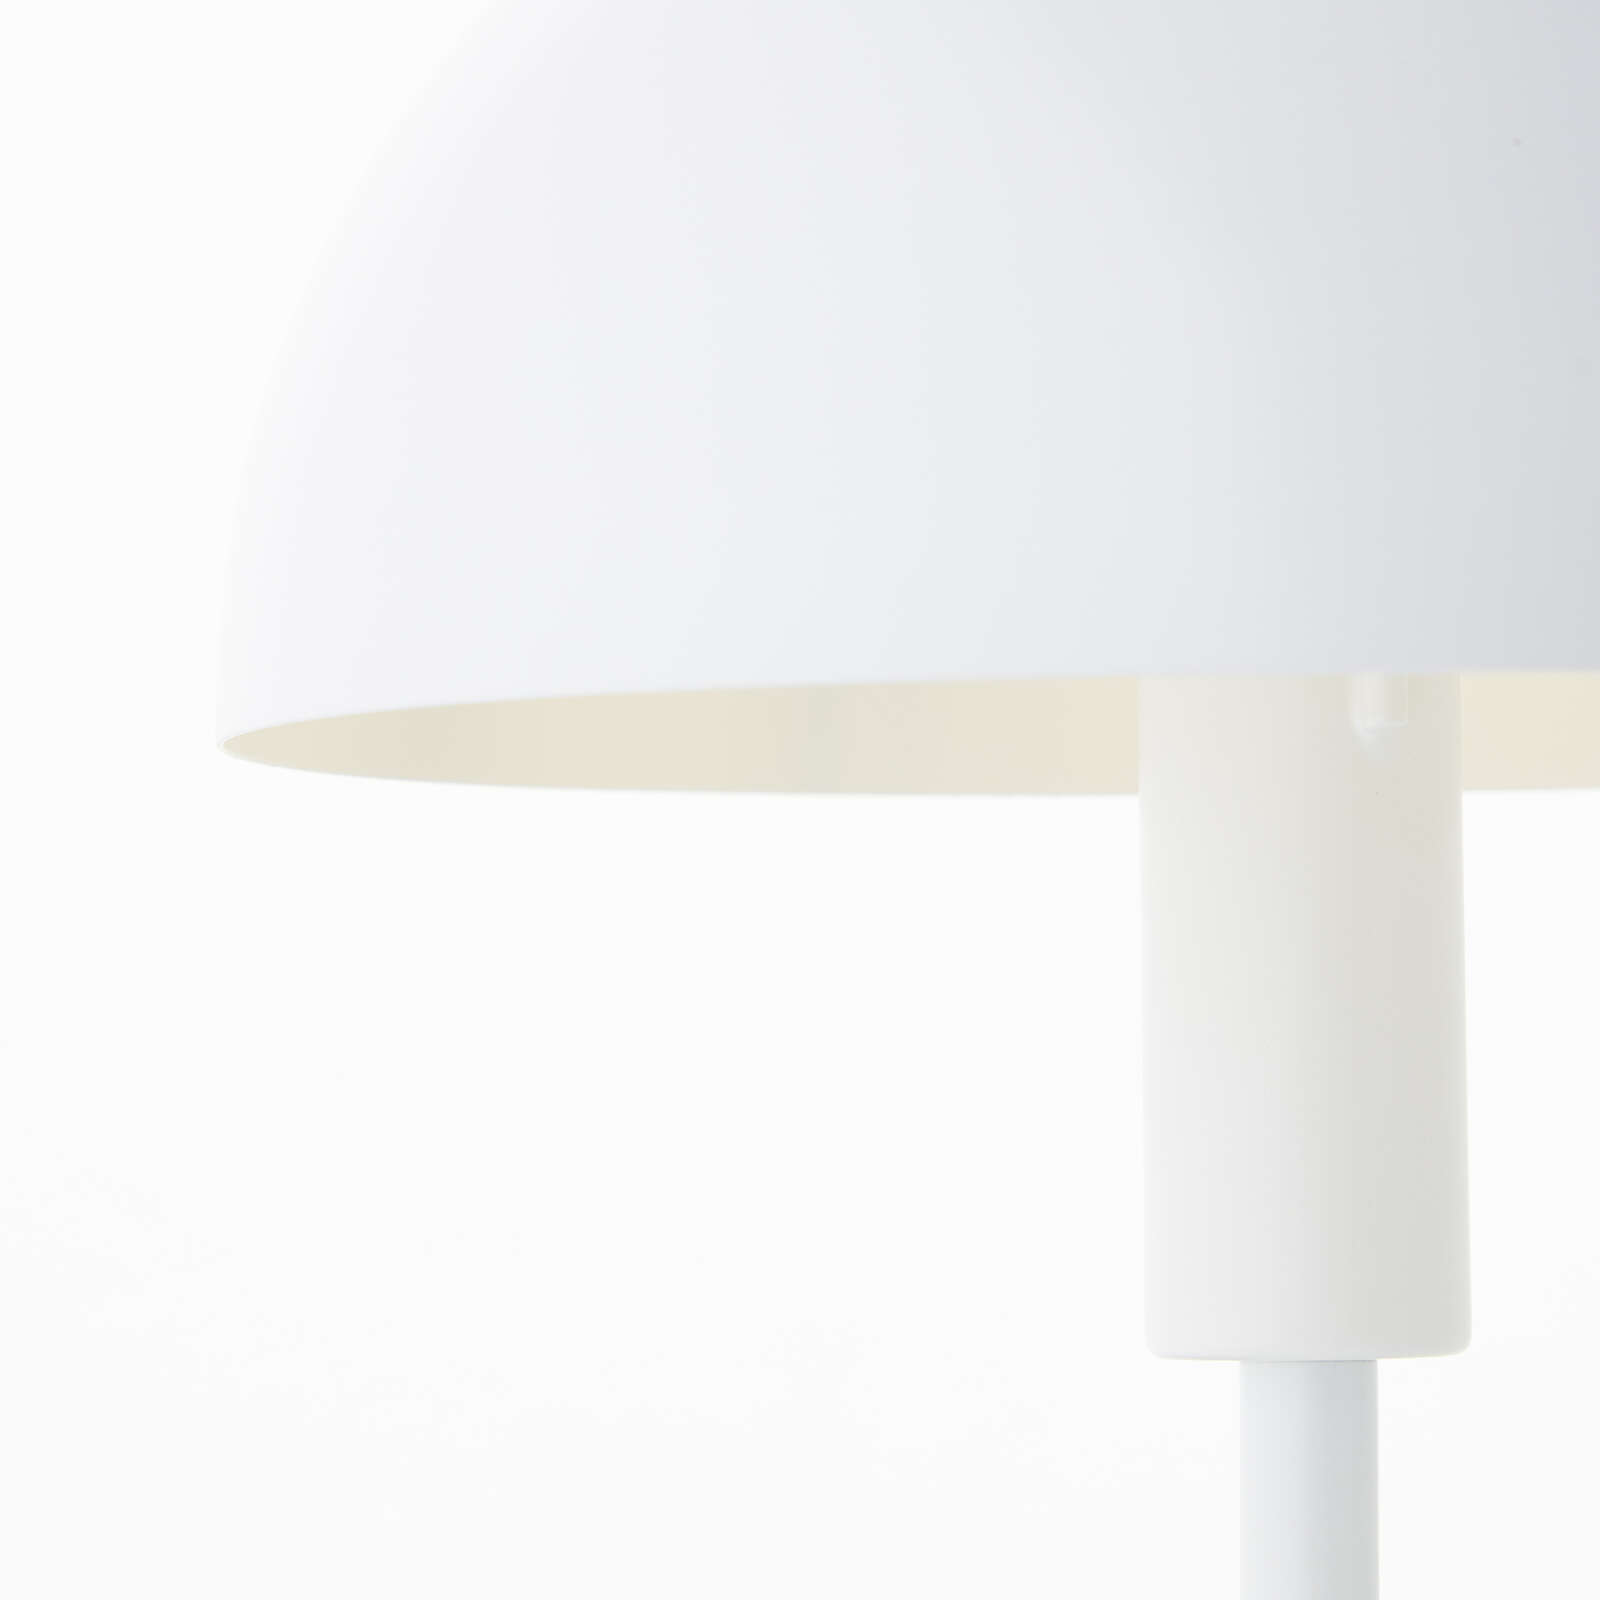             Lampe de table en métal - Lasse 3 - Blanc
        